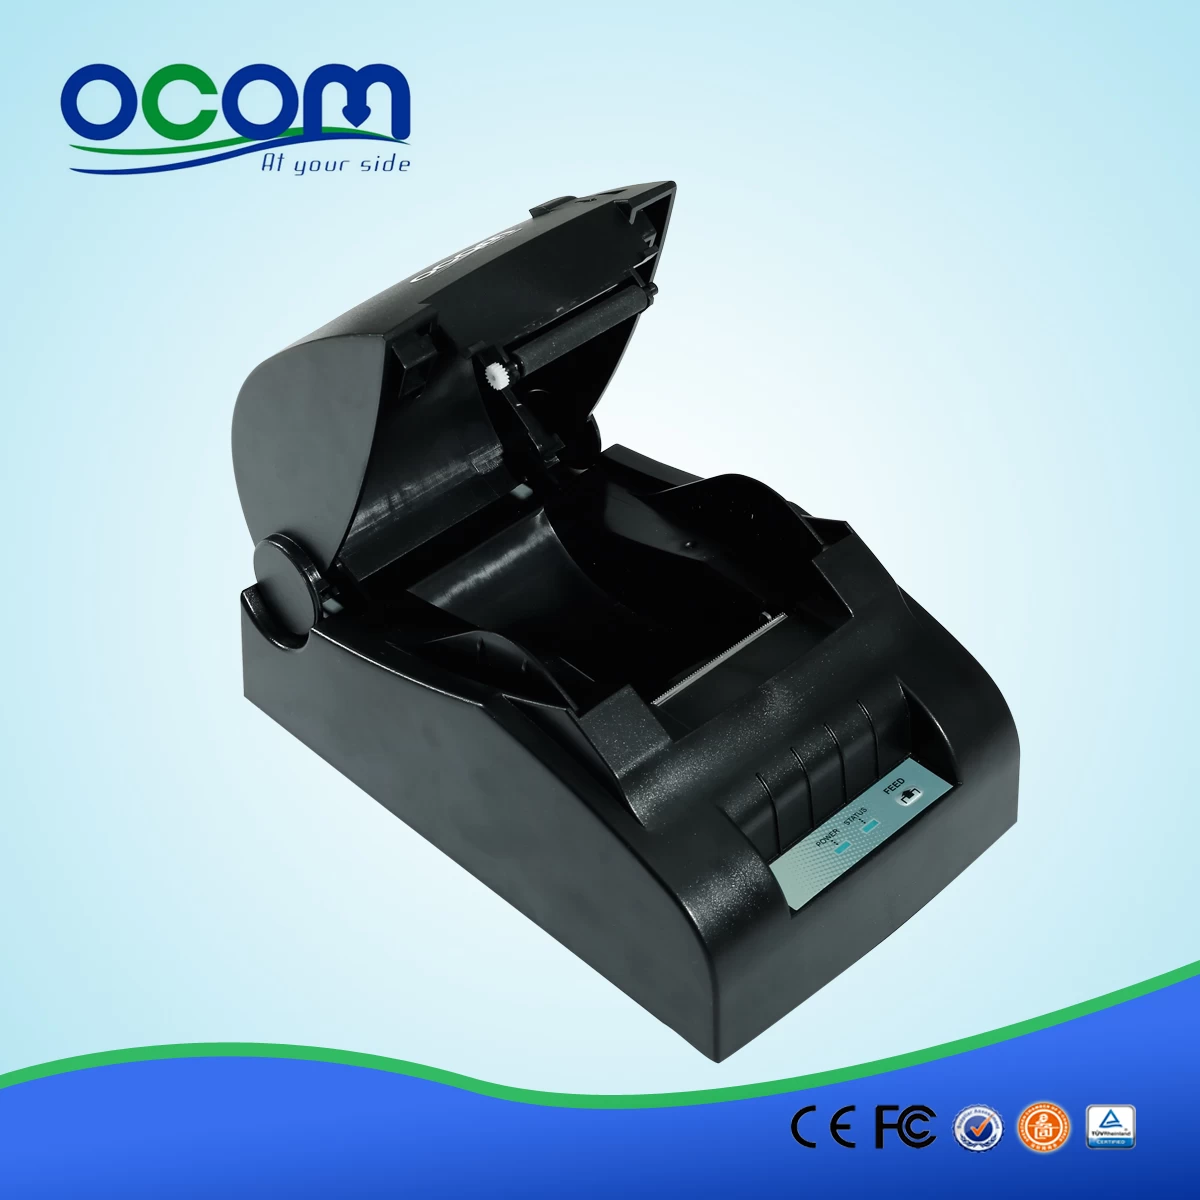 58mm Thermal Receipt Printer (OCPP-582)